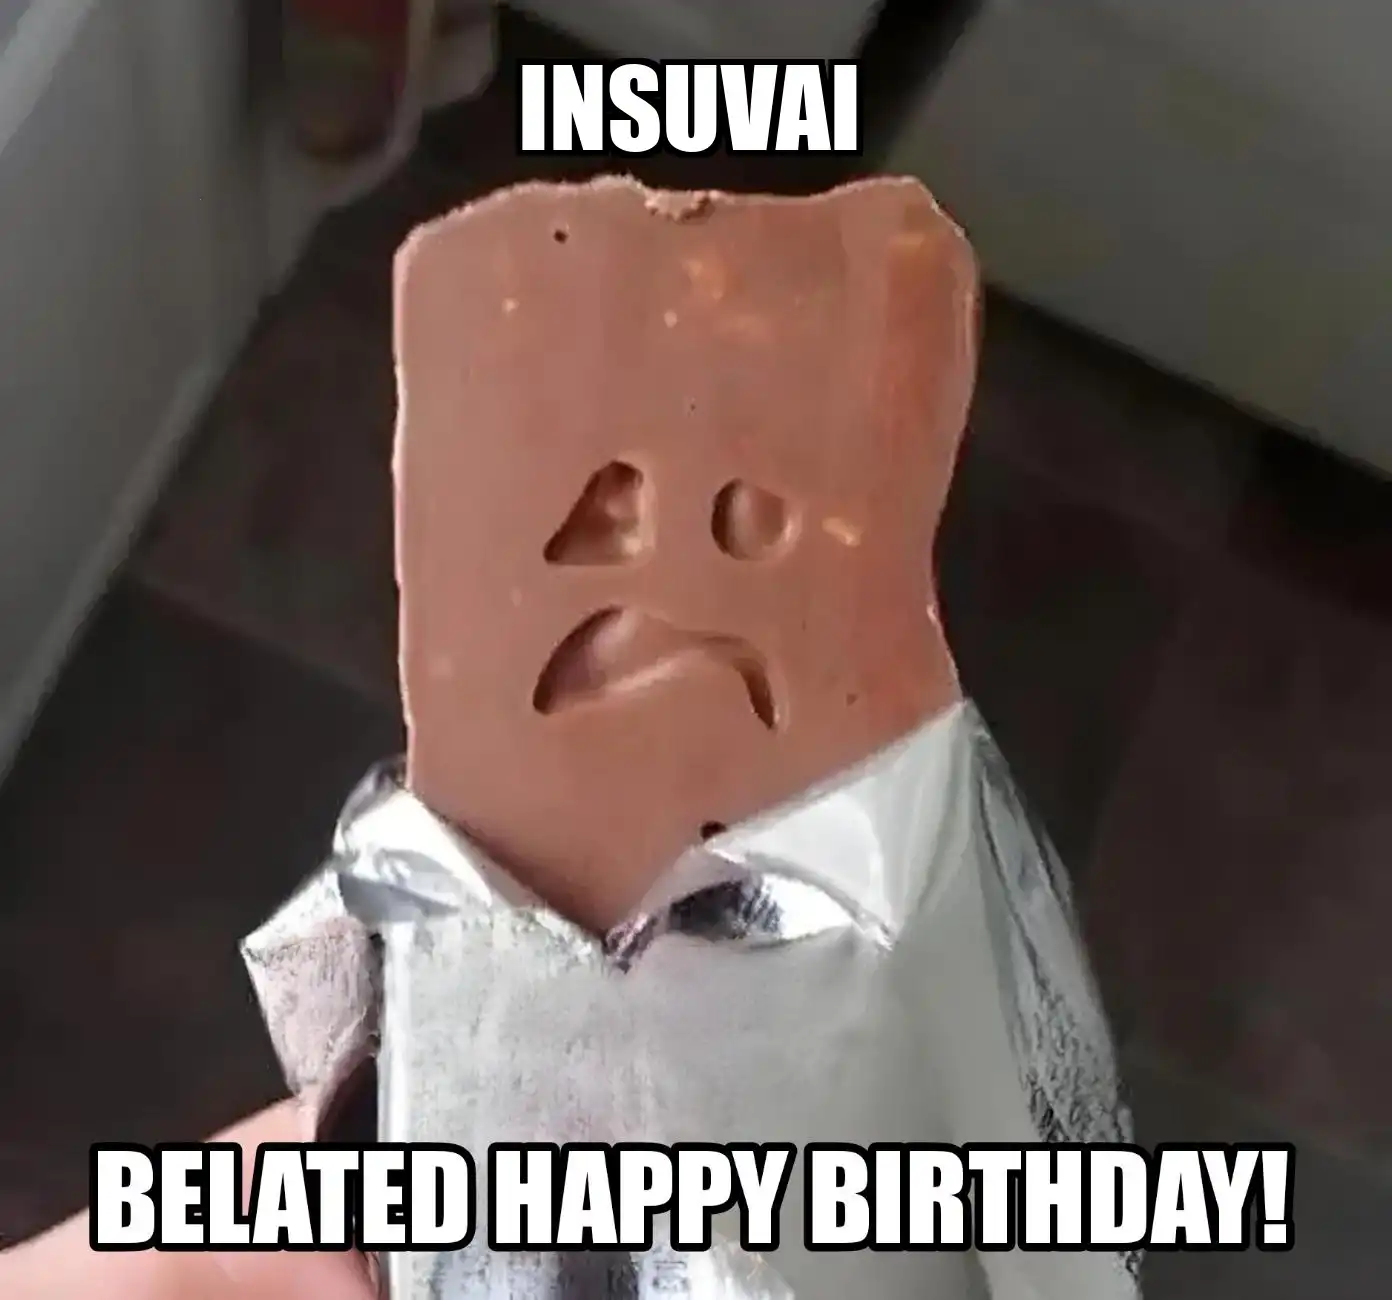 Happy Birthday Insuvai Belated Happy Birthday Meme